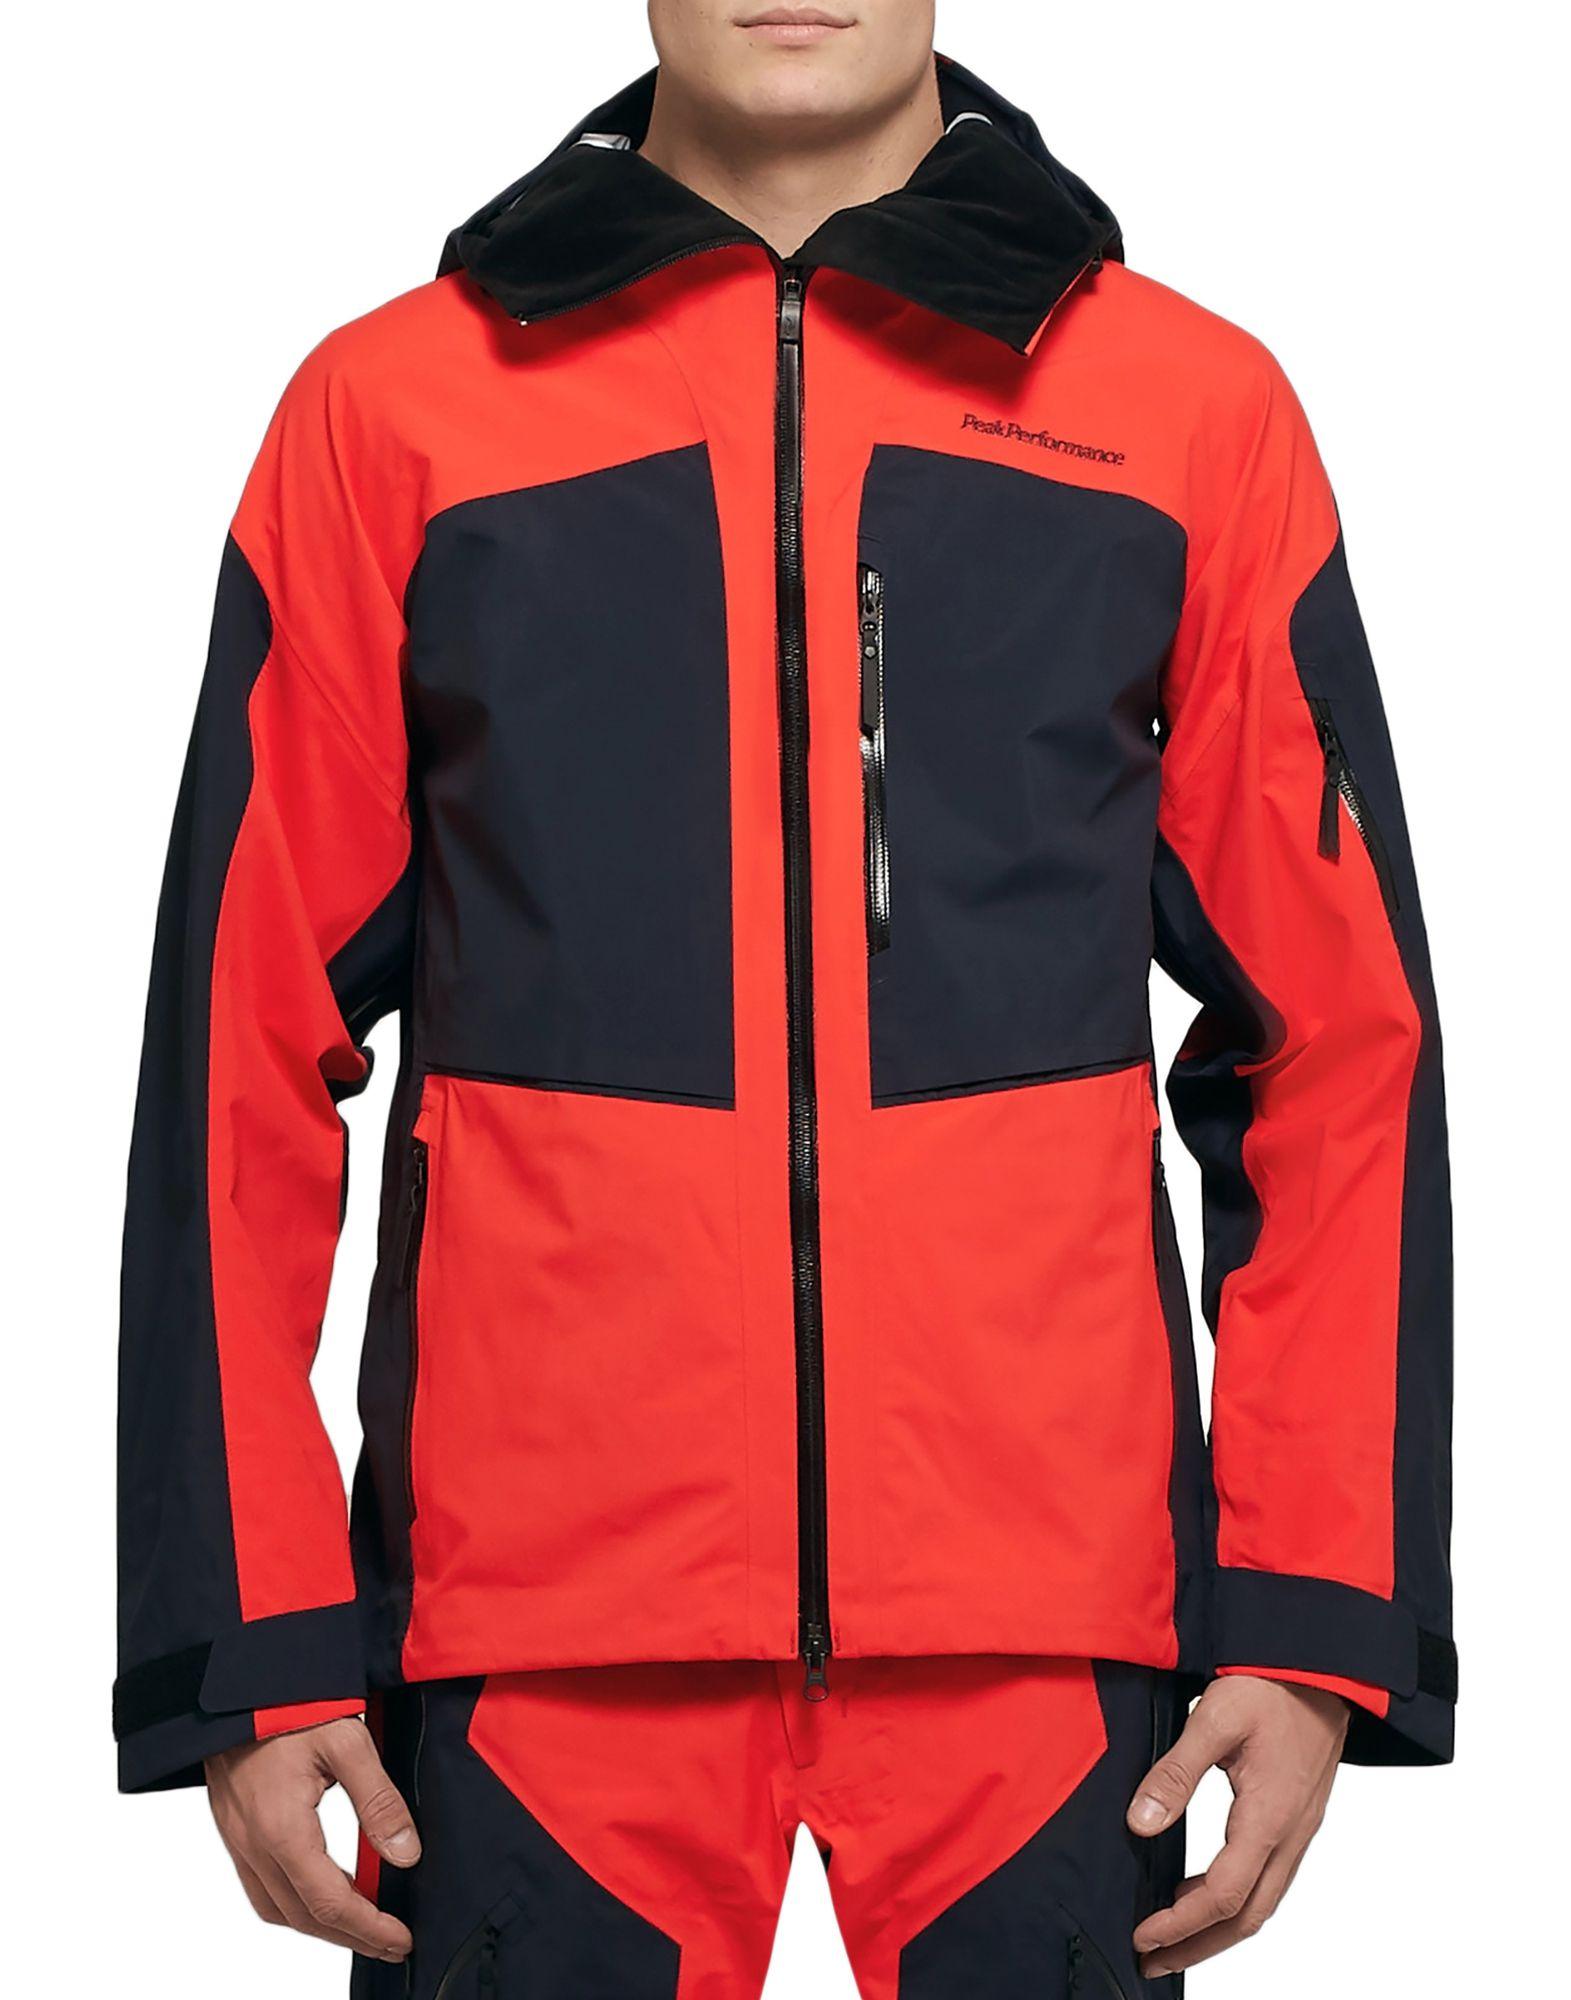 Peak Performance Gravity Gore-tex Hooded Ski Jacket in Red for Men - Lyst